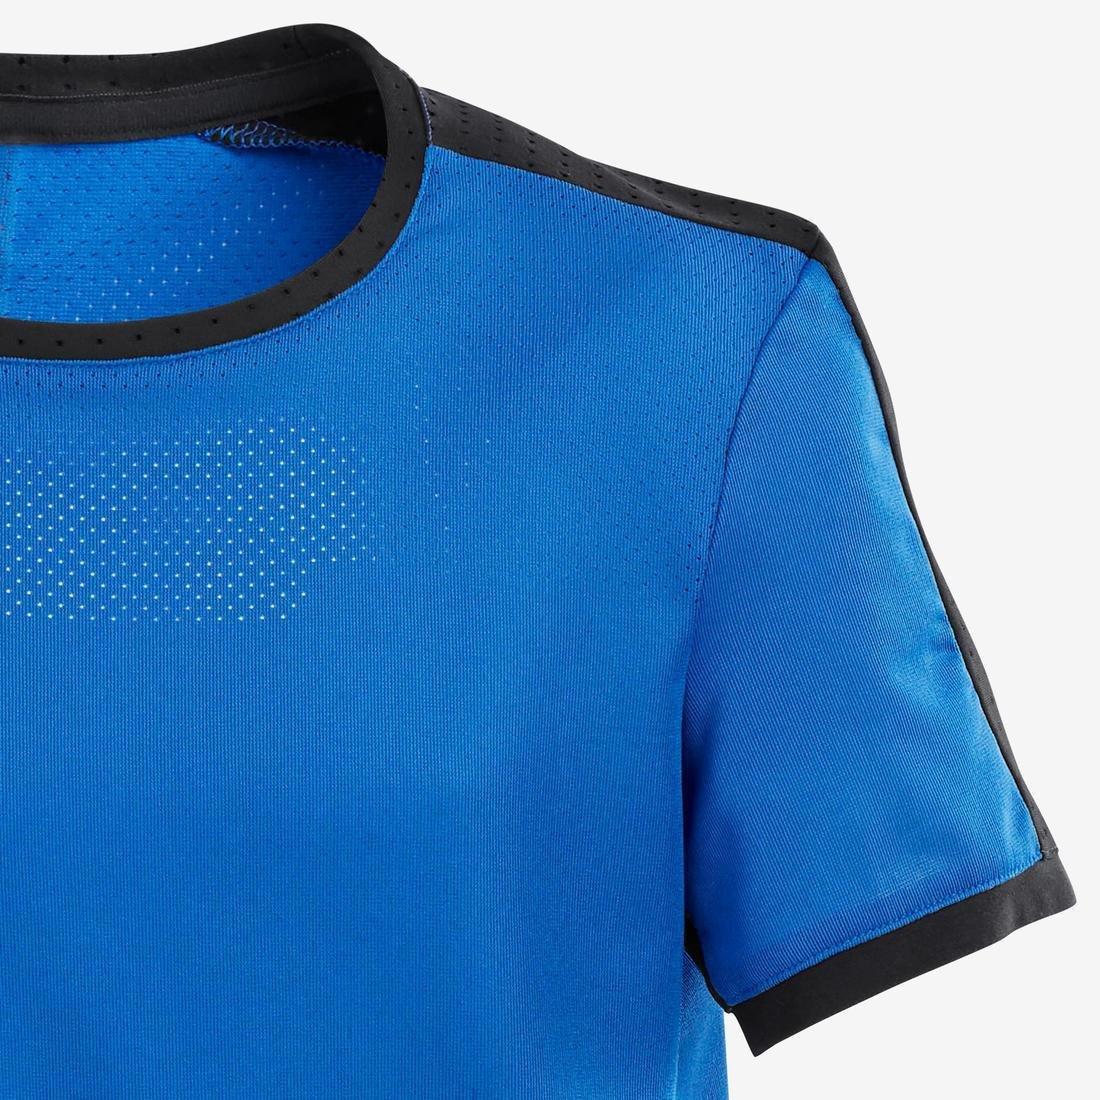 DOMYOS - Kids Boys Technical Breathable Gym T-Shirt S900, Blue